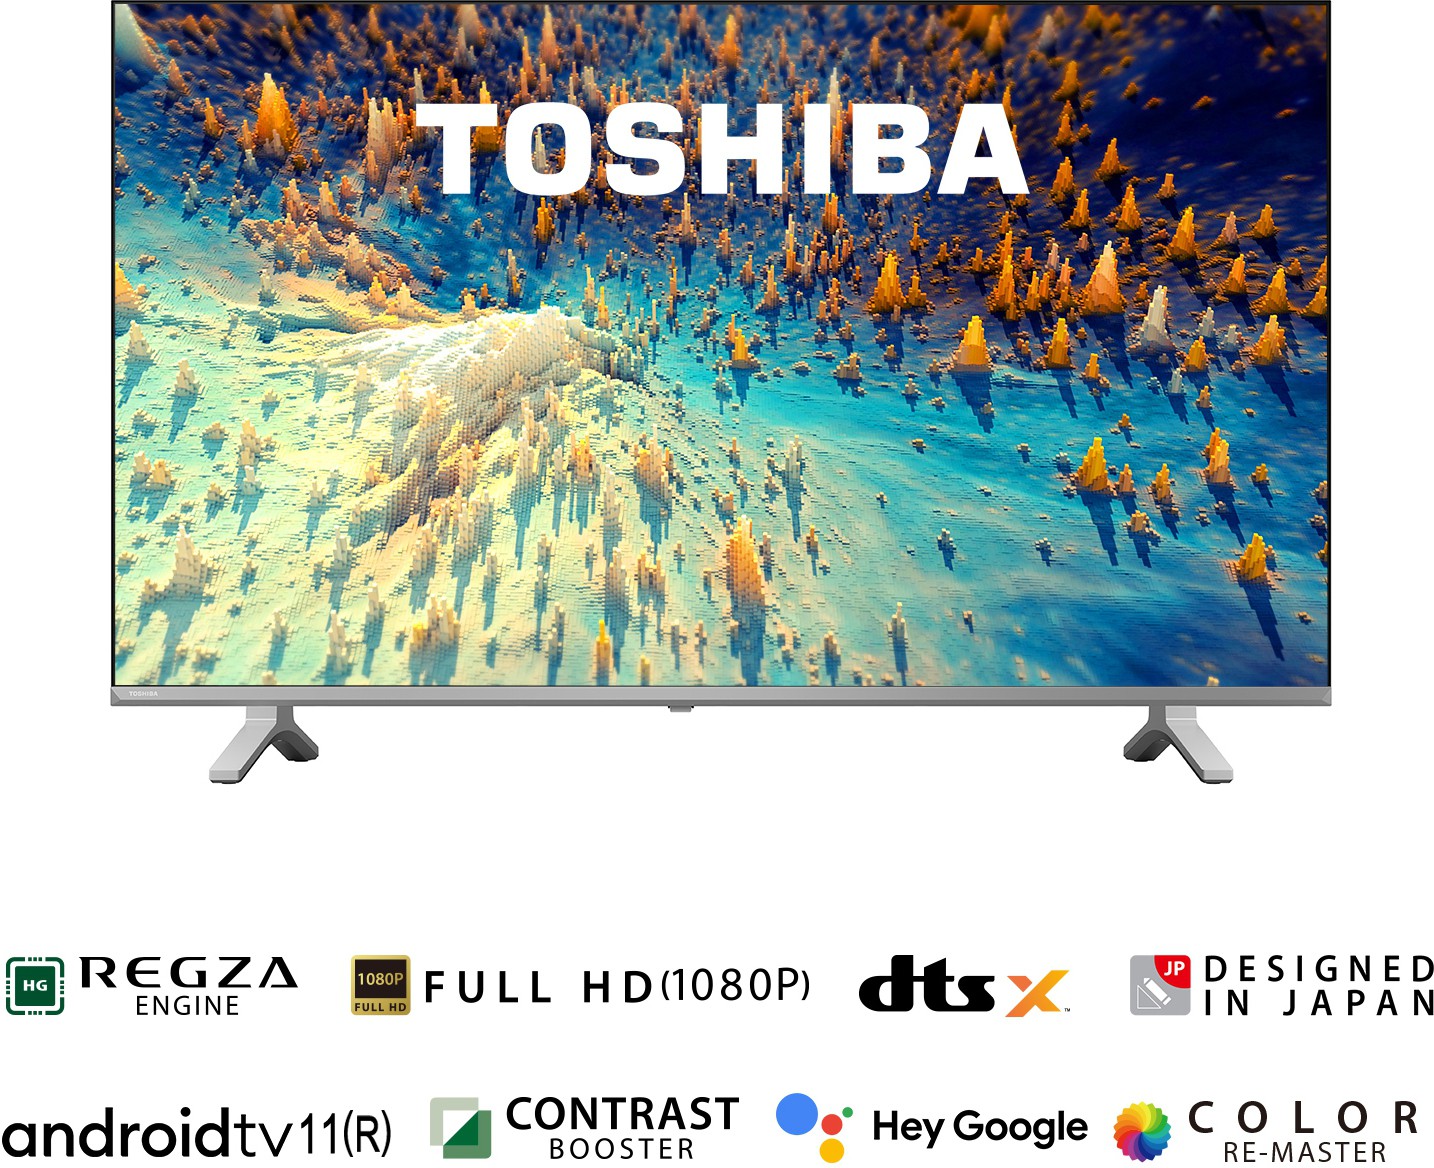 TOSHIBA  V35KP (43 inch) Full HDA+ Grade LED (43V35KP)